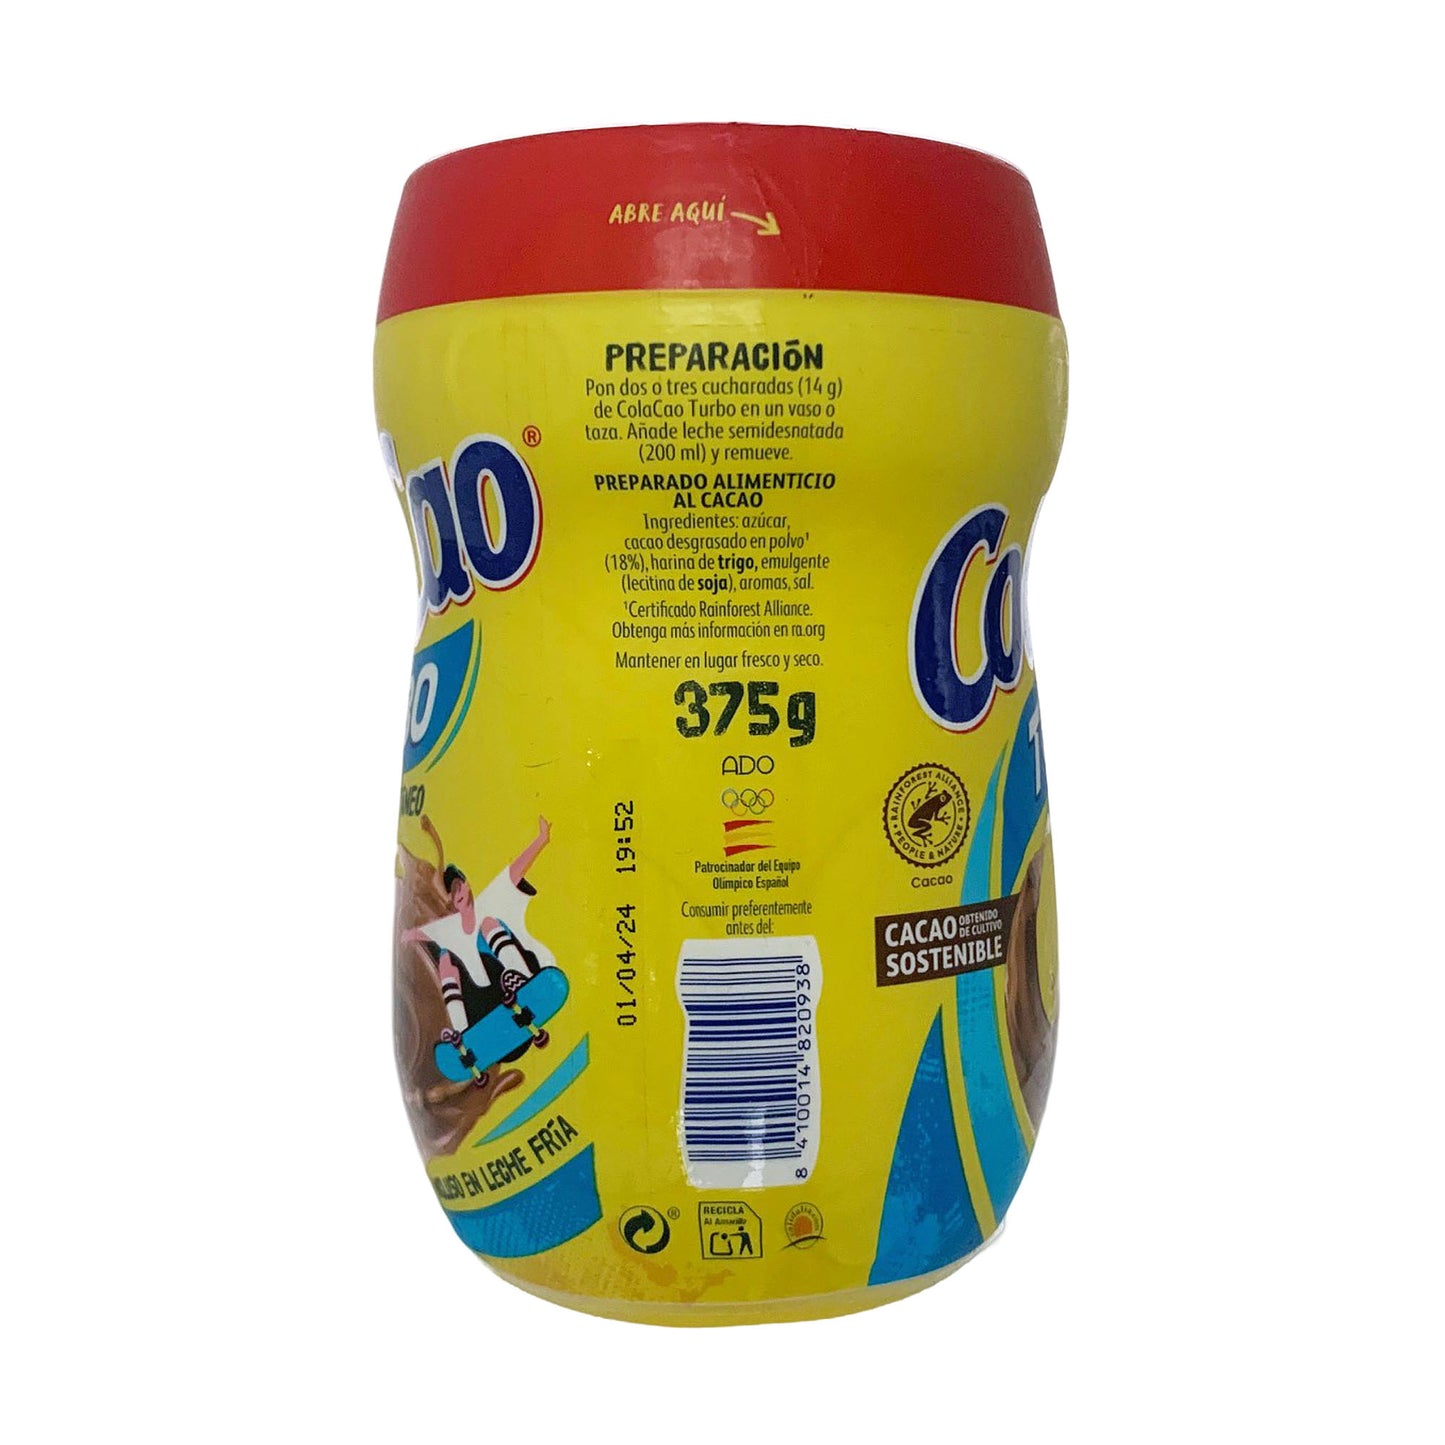 ColaCao Turbo Mezcla Instantánea de Bebida de Chocolate Frío o Caliente de España 375g